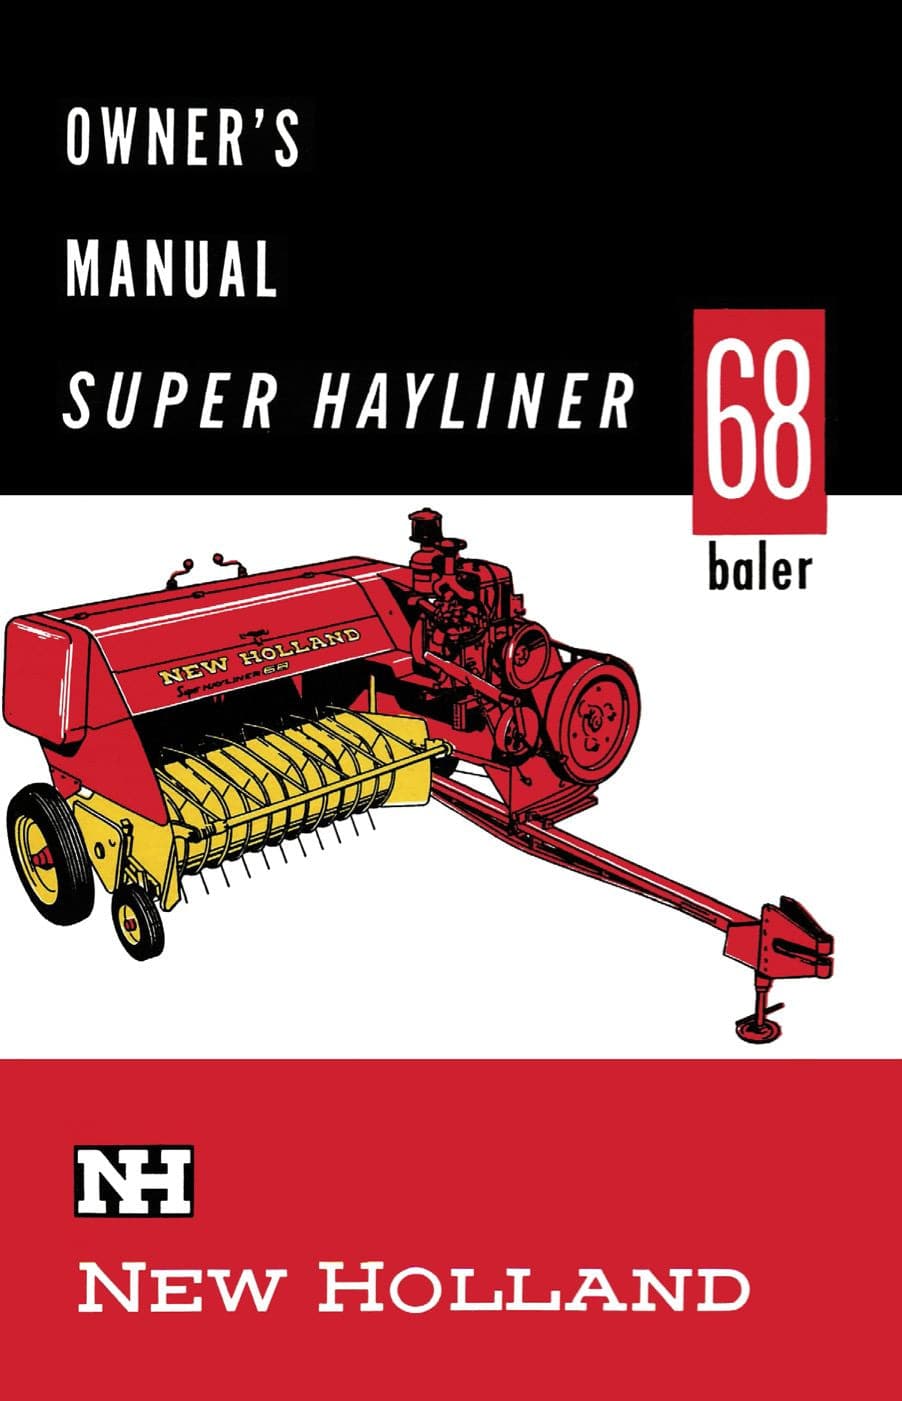 New Holland Super Hayliner 68 Baler - Owner's Manual - Ag Manuals - Digital Farm Manuals